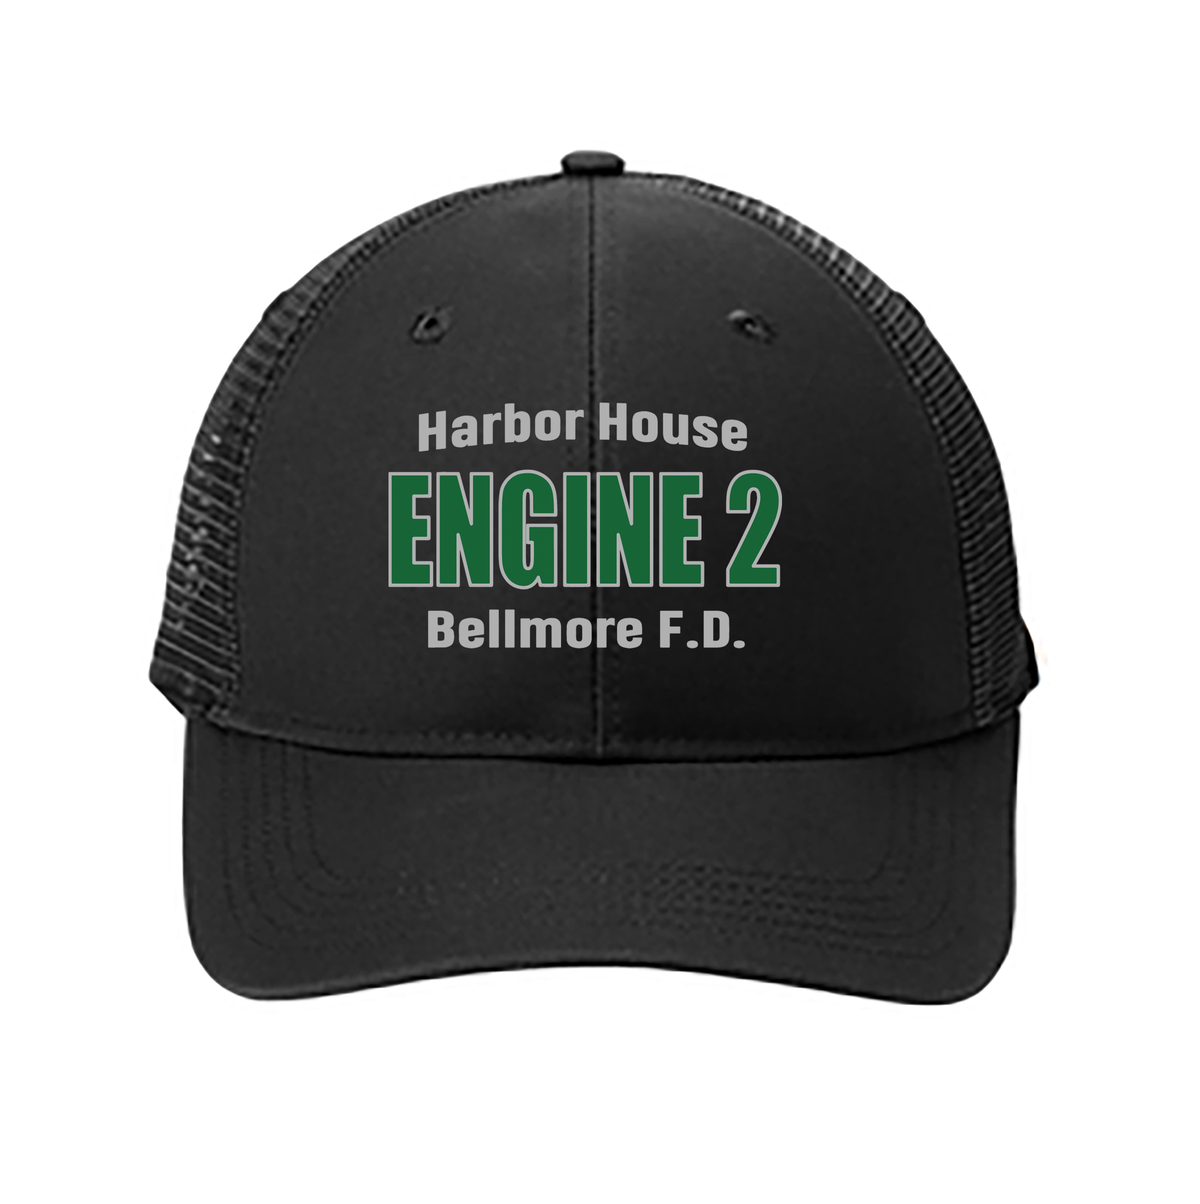 Harbor House Engine 2 Carhartt Professional Series Cap